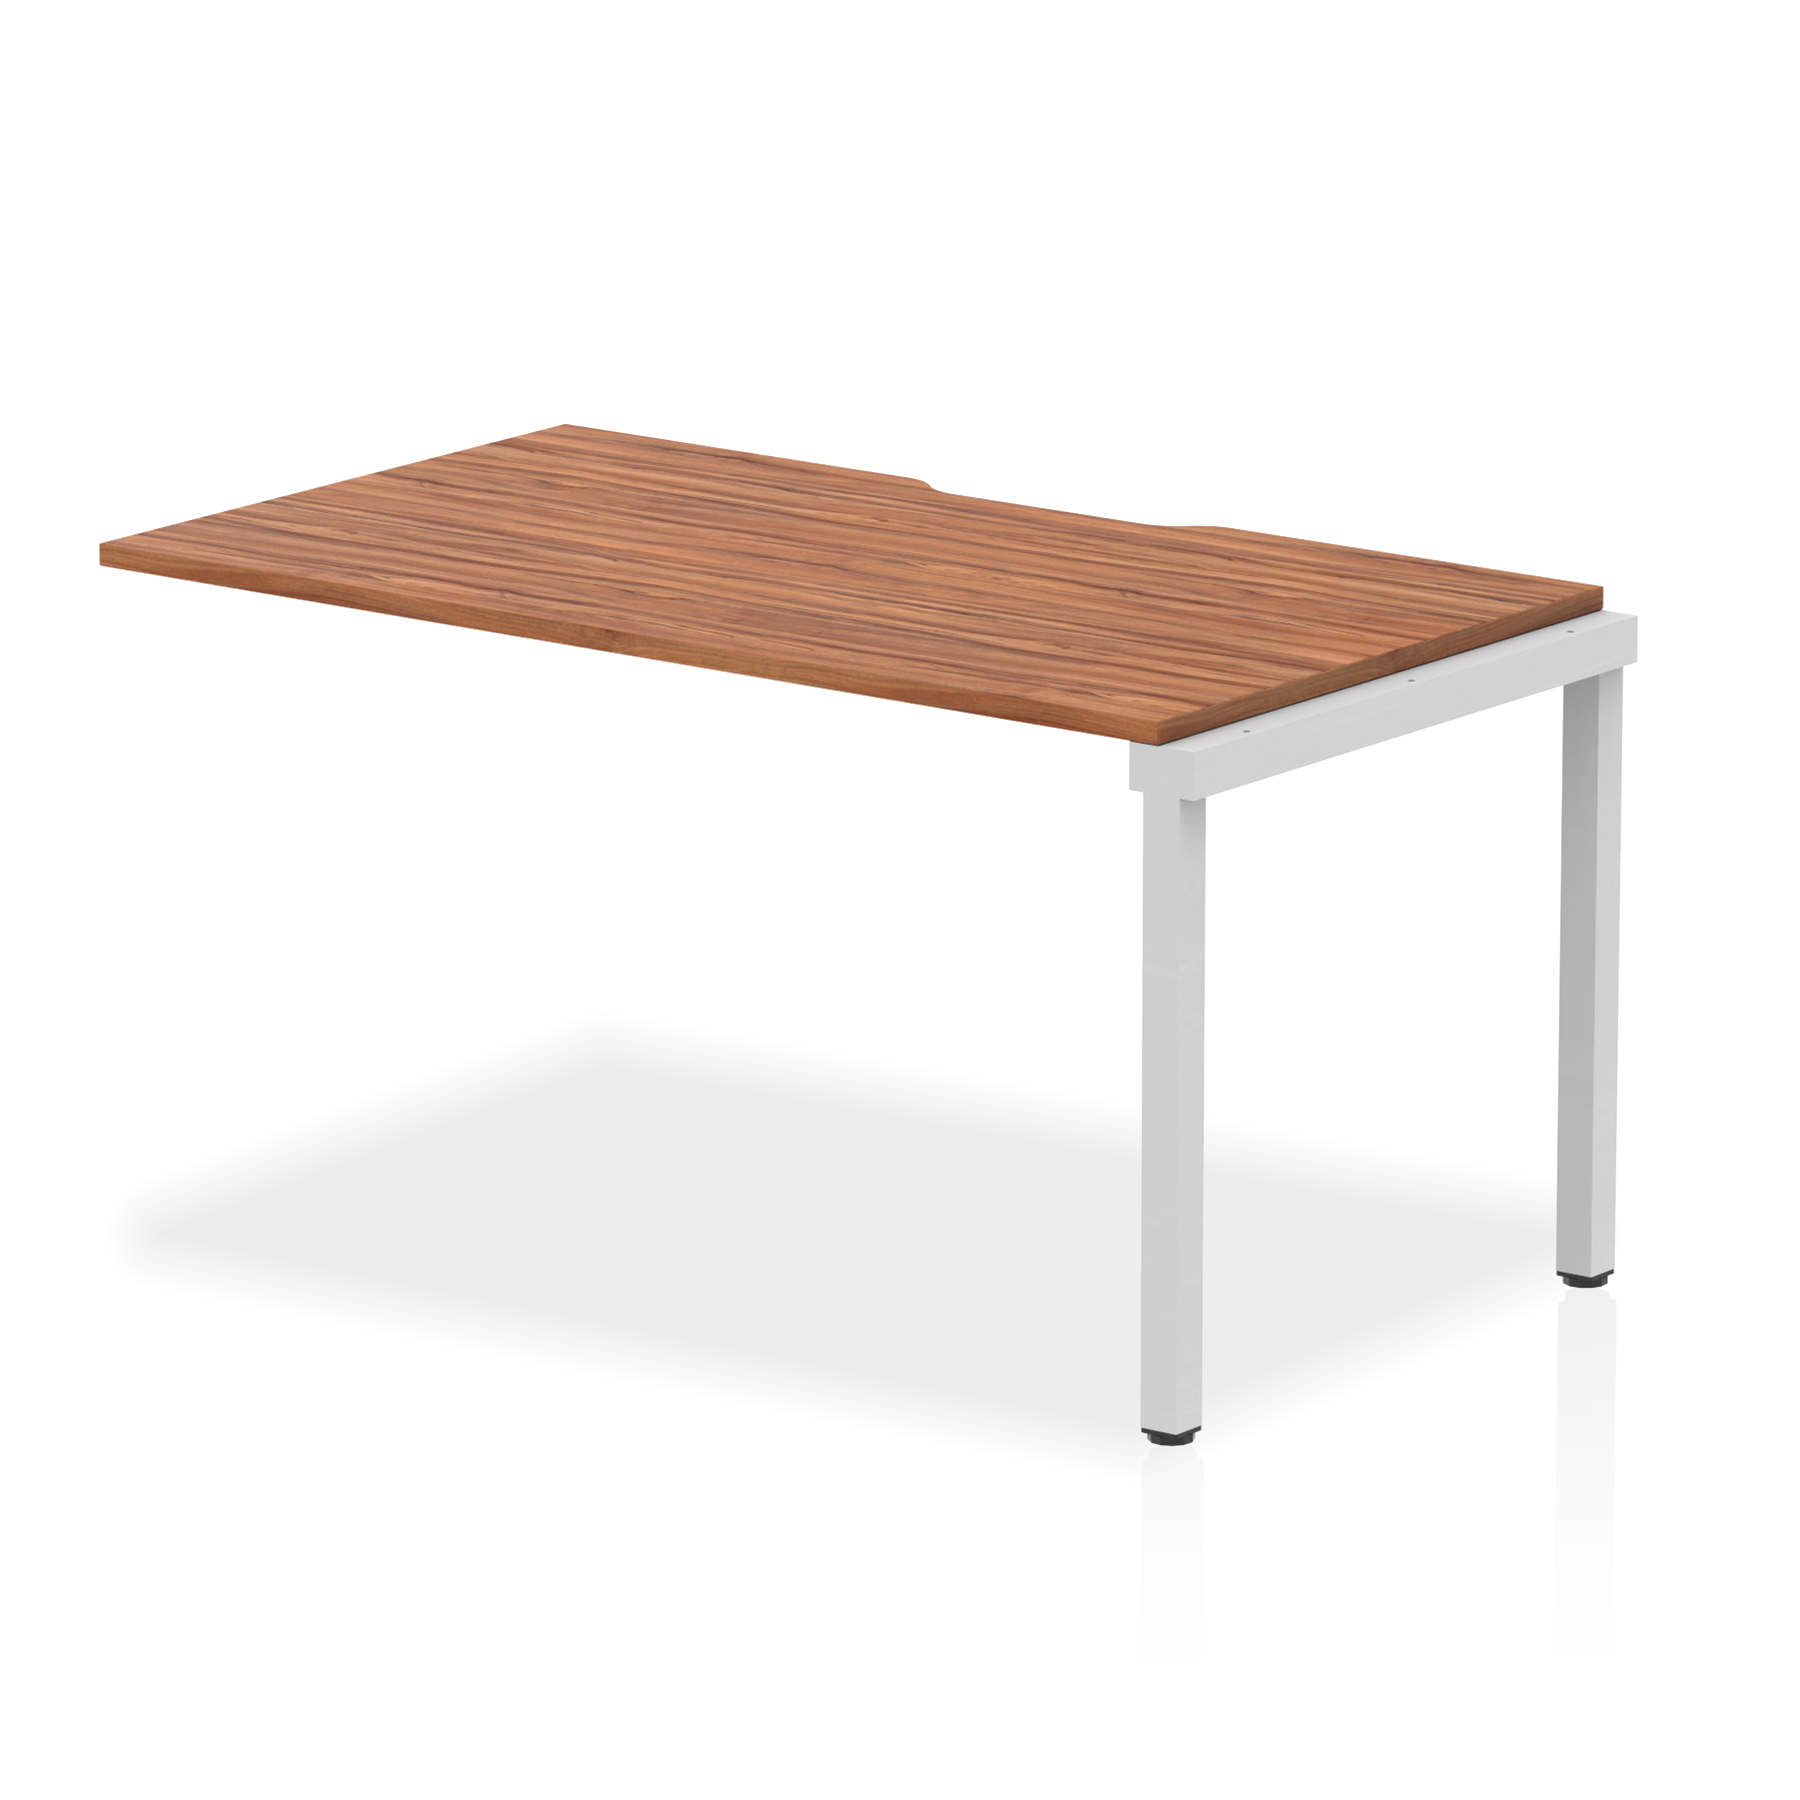 Evolve Plus Single Row Bench Desk Extension Kit